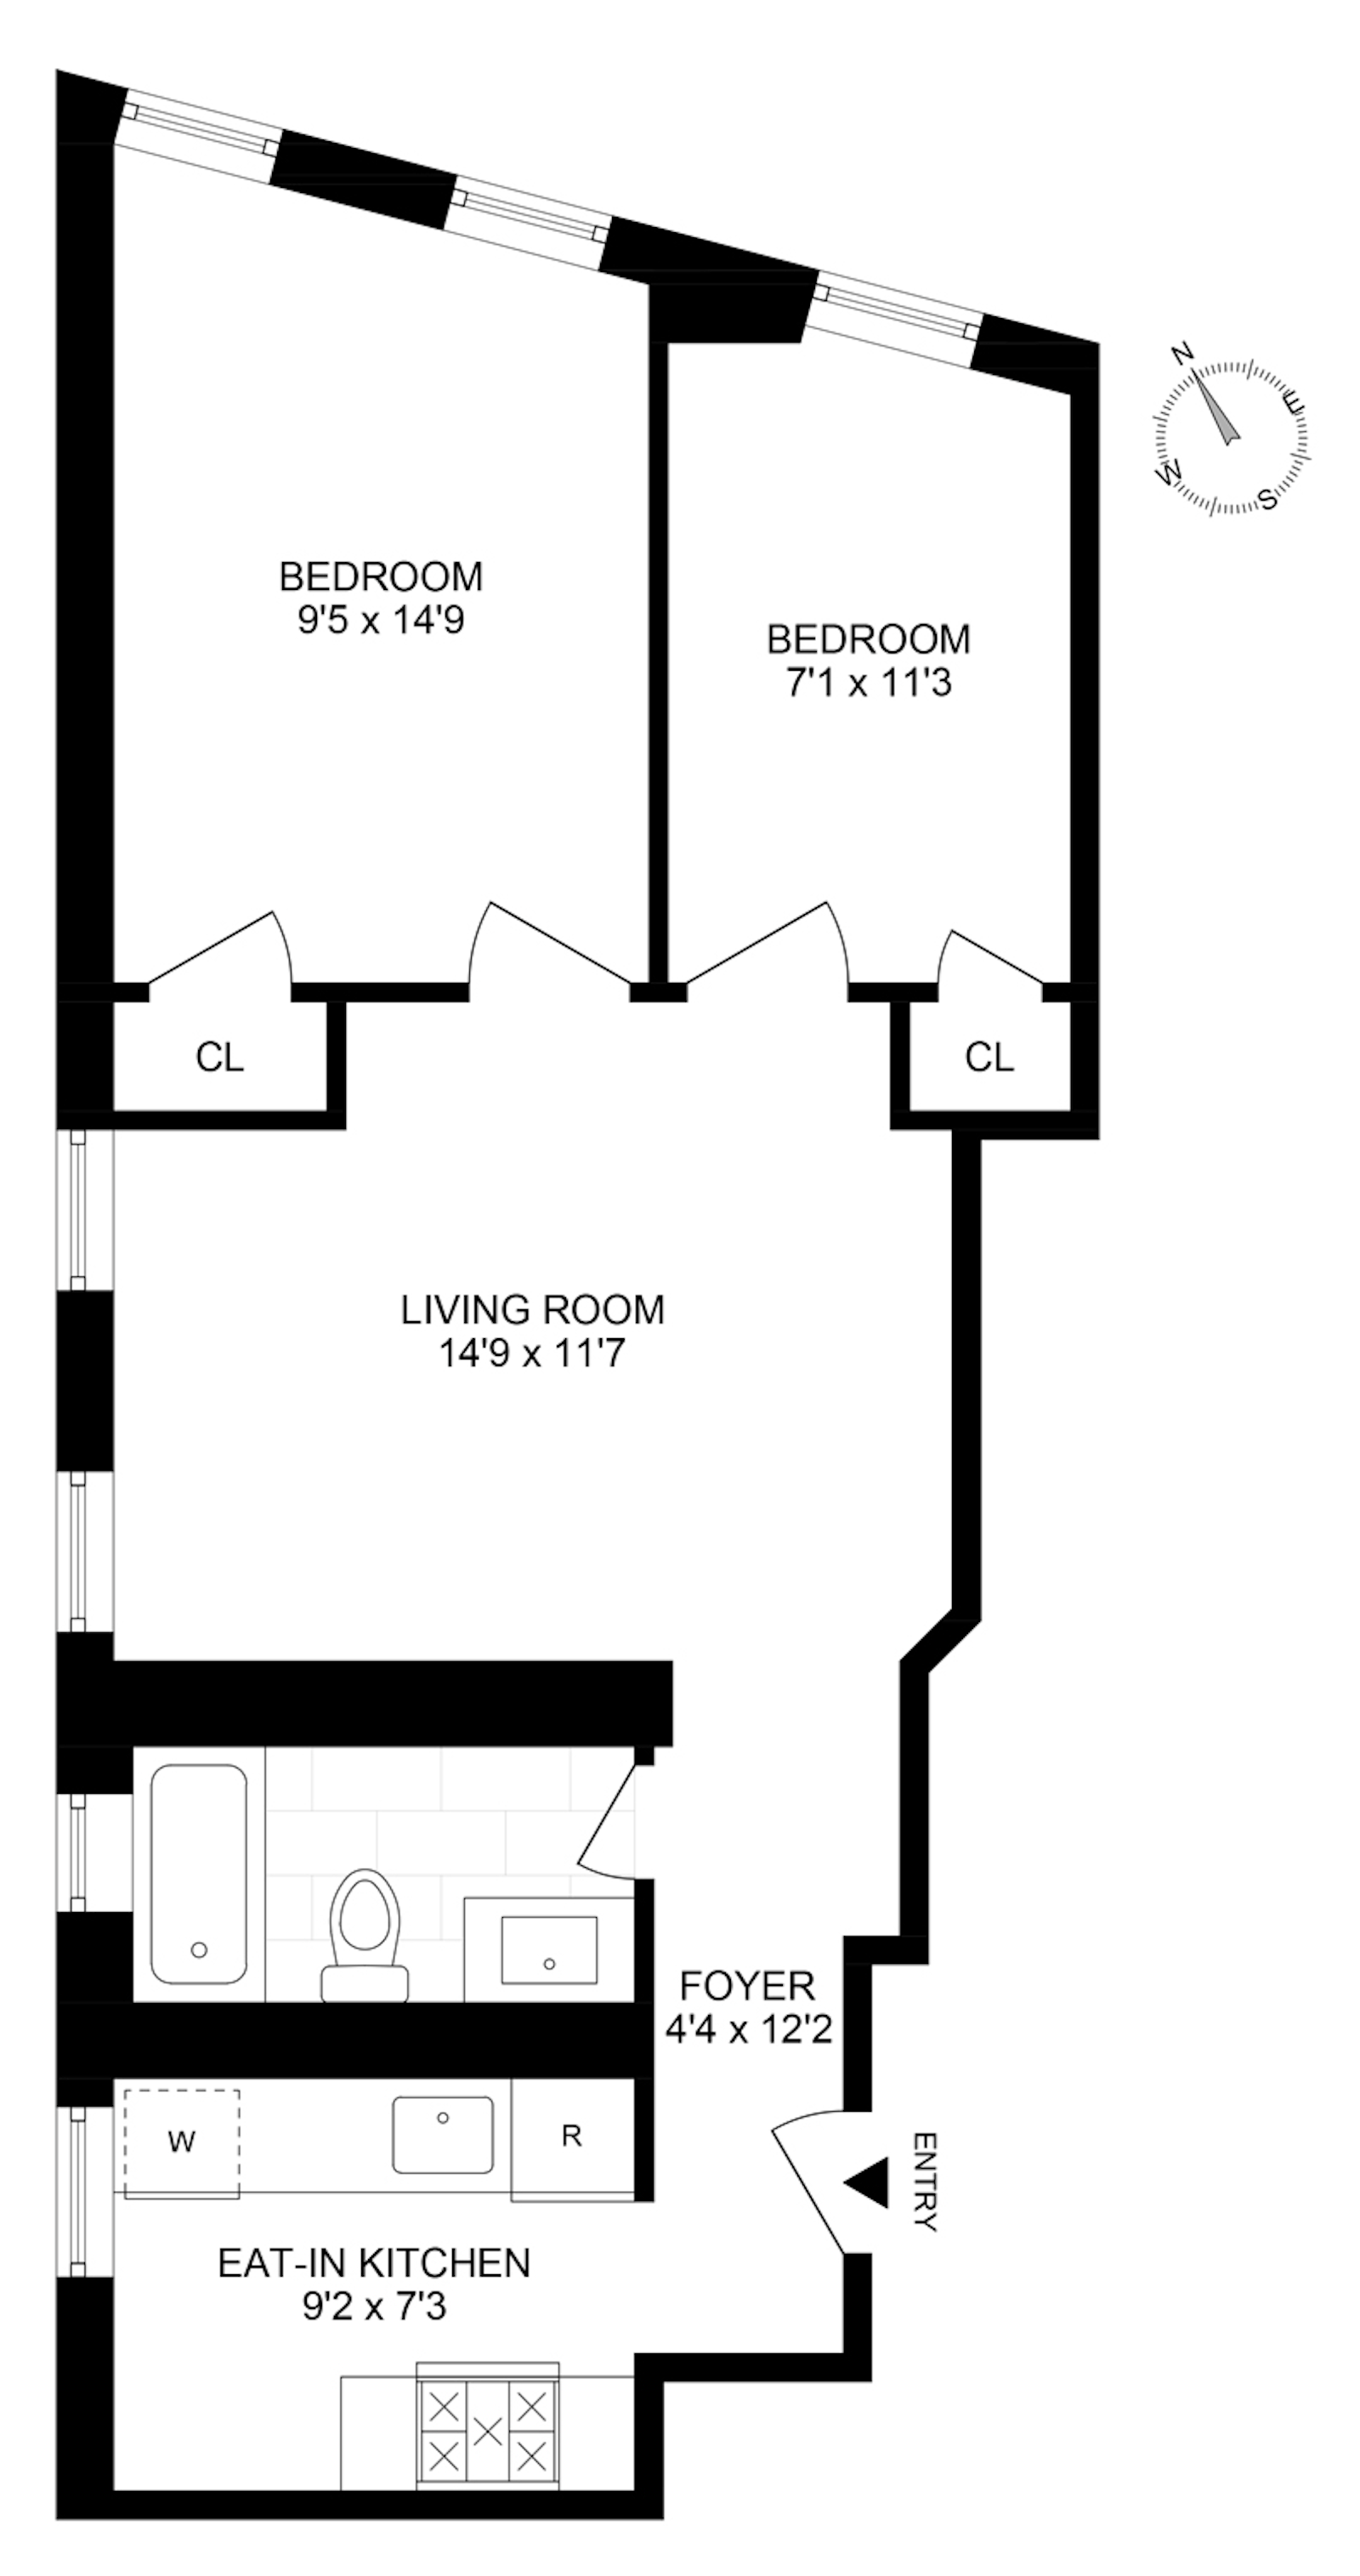 Floorplan for 29 -35 W 119th Street, 5